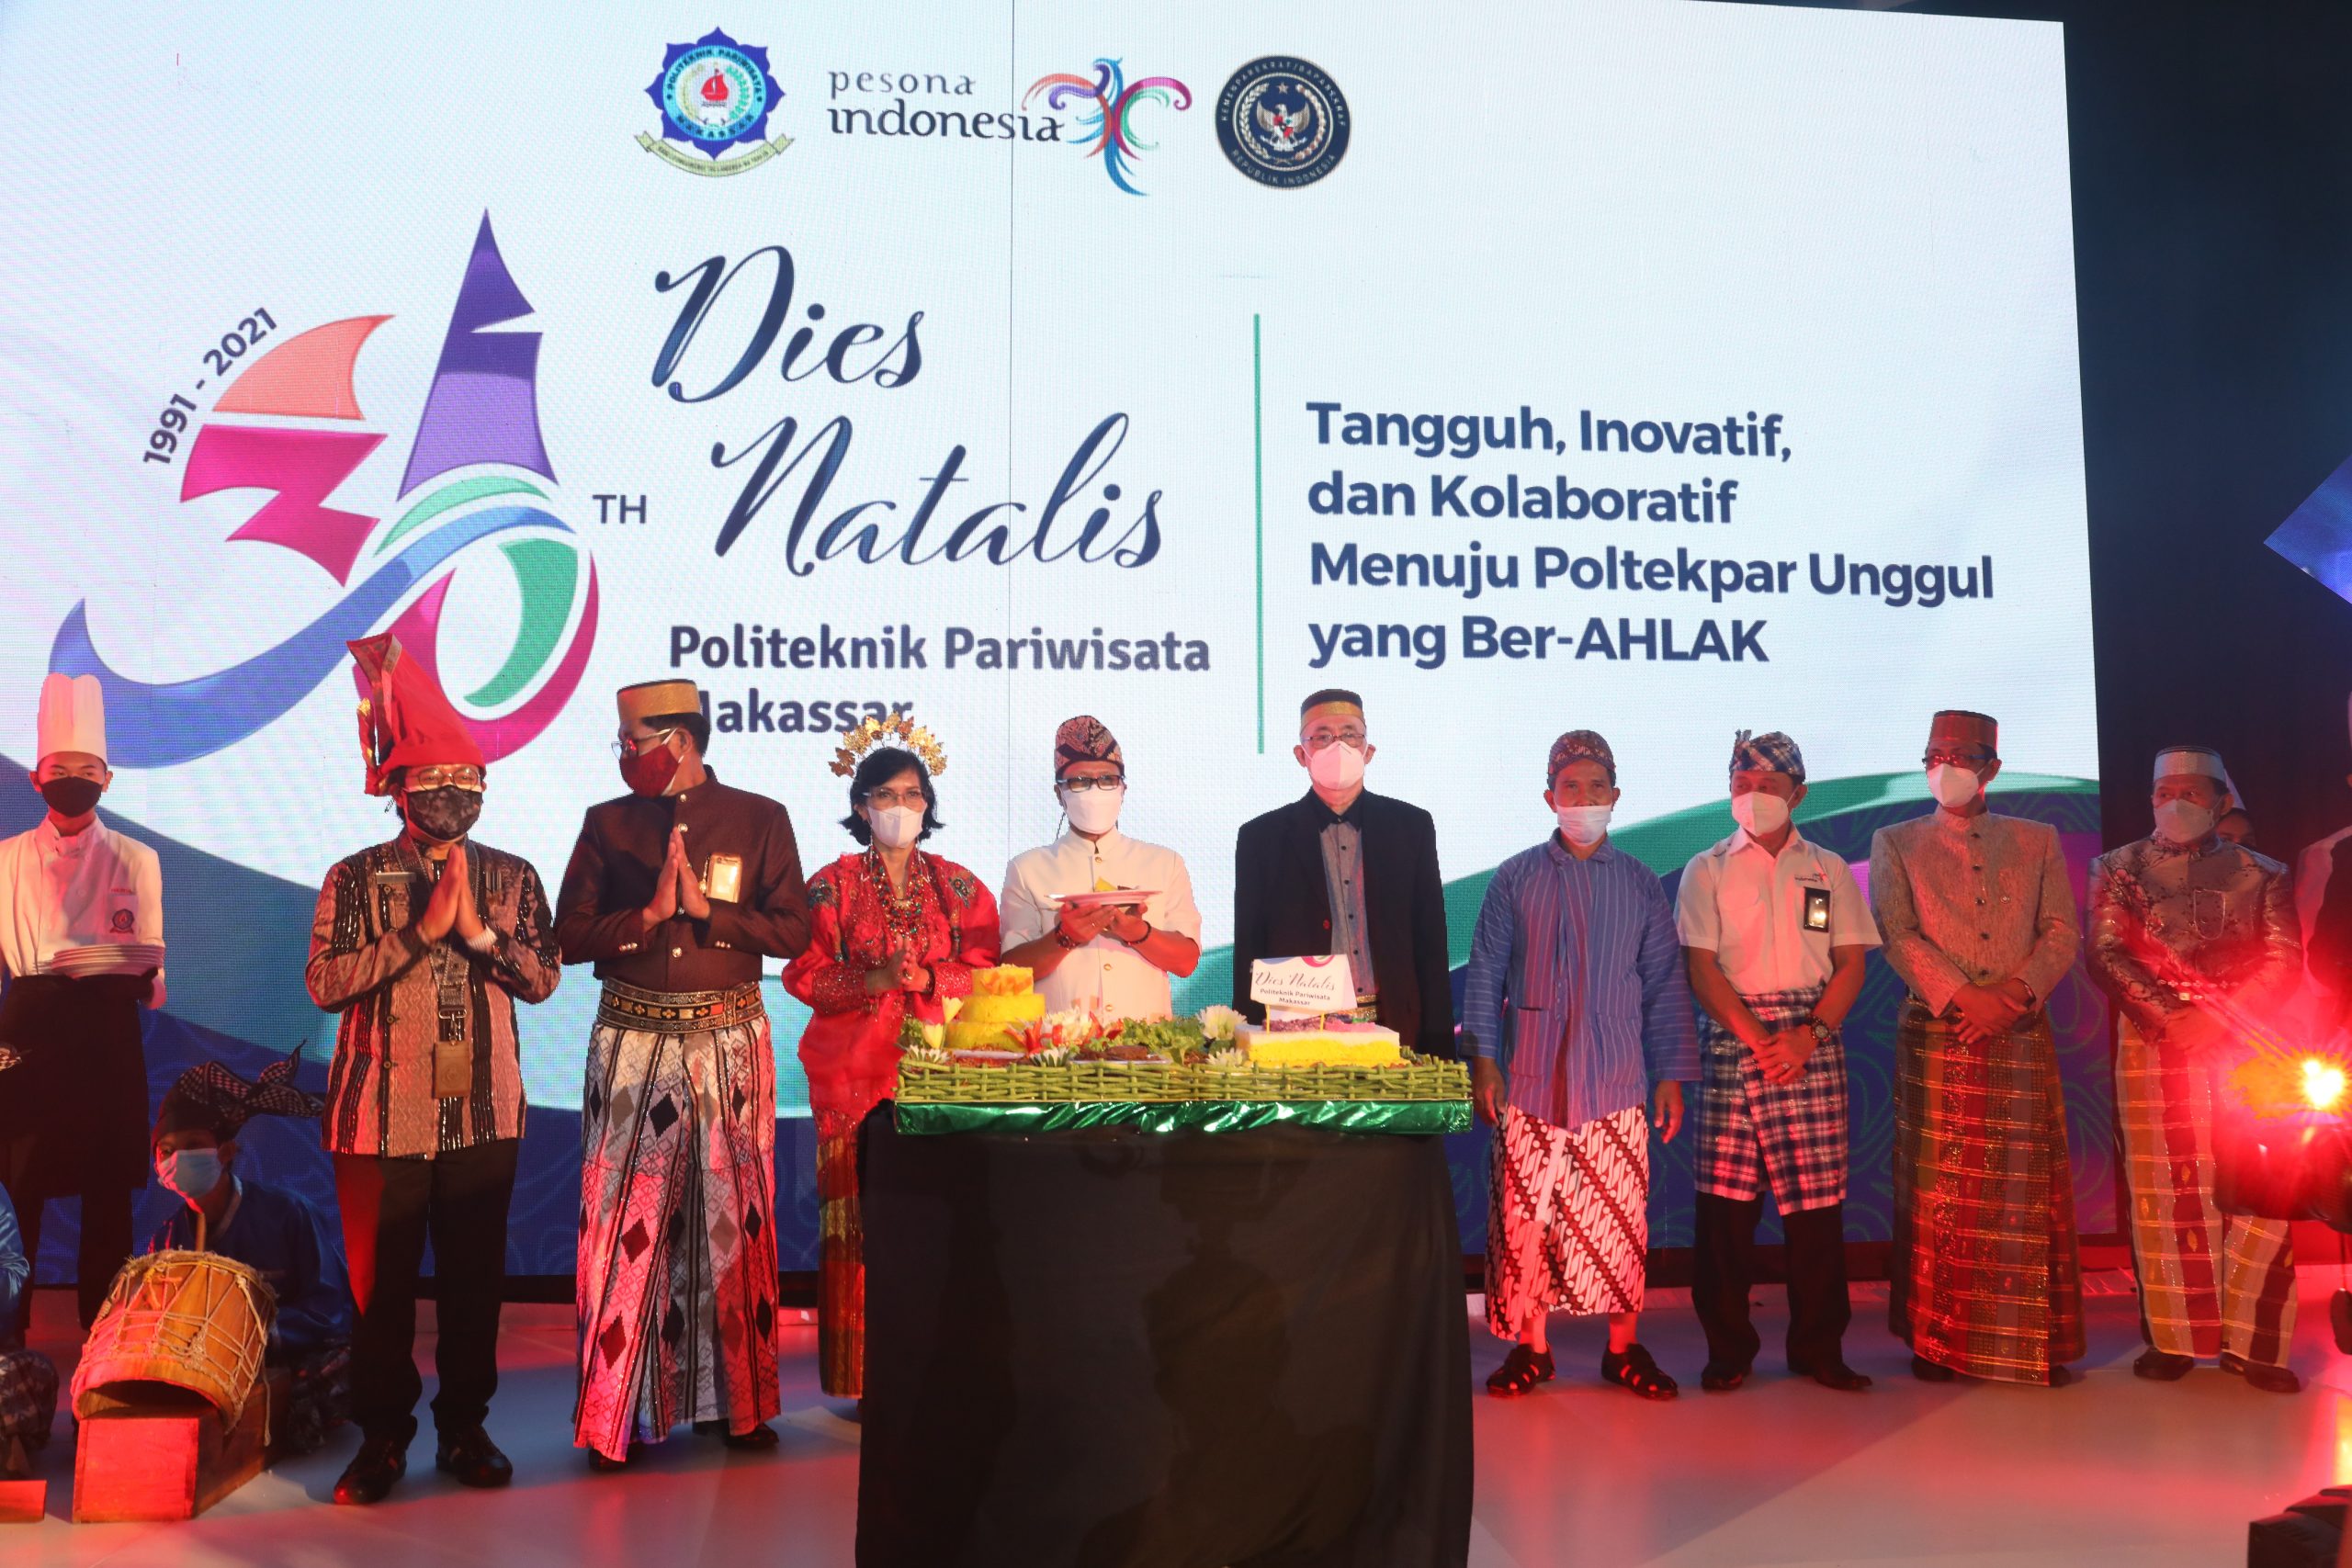 Politeknik Pariwisata Makassar Menggelar Seremoni Penutupan Rangkaian Kegiatan Dies Natalis Poltekpar Makassar pada Senin, 20 September 2021